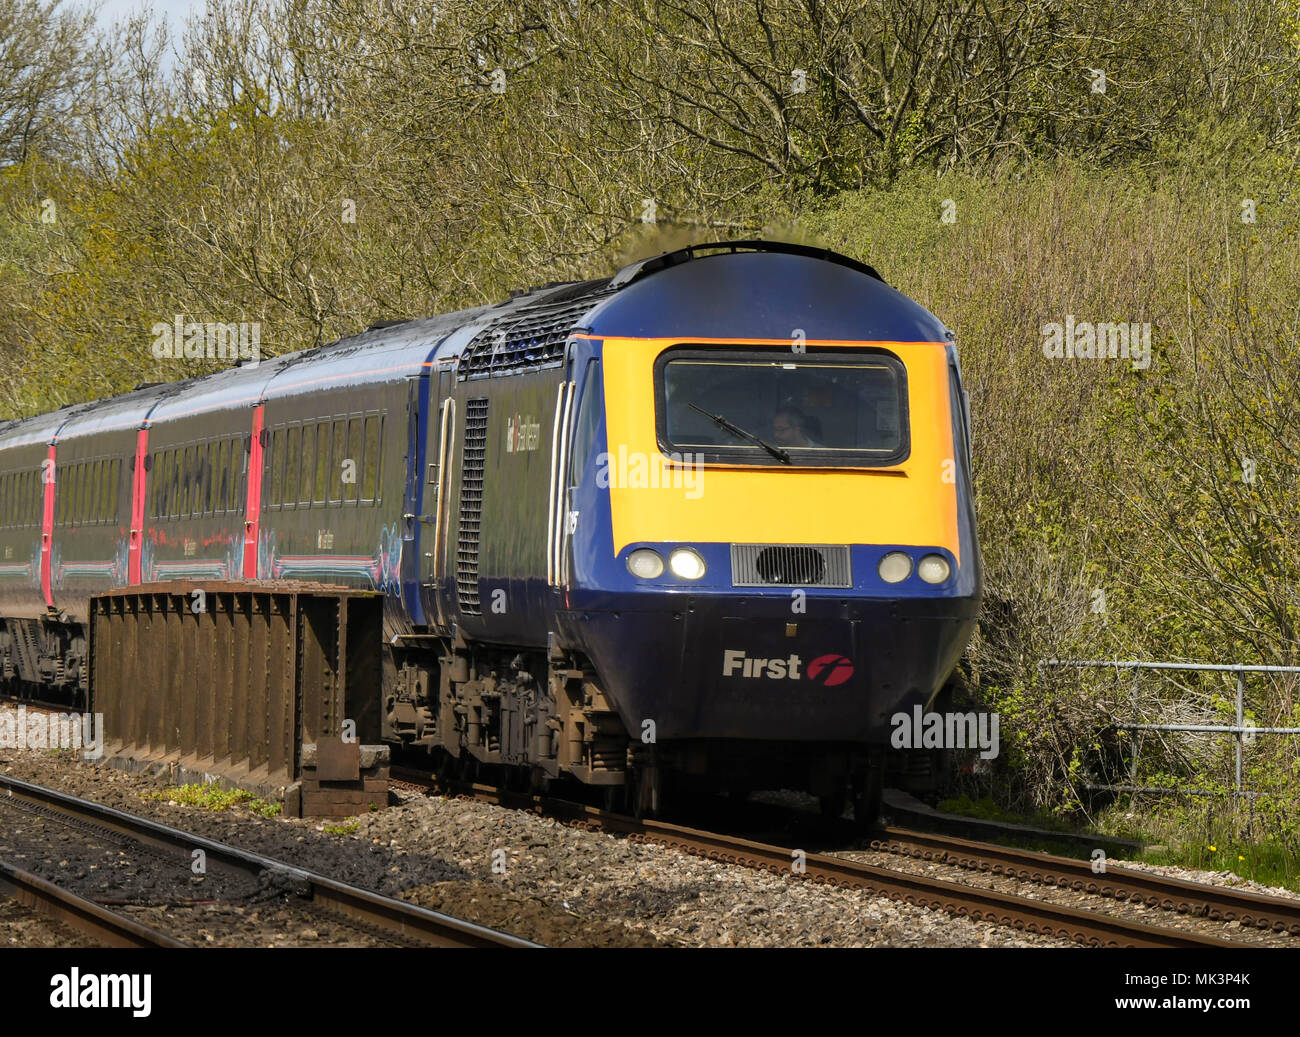 Inter city high speed diesel passenger train at speed on the main railway line near Cardiff Stock Photo